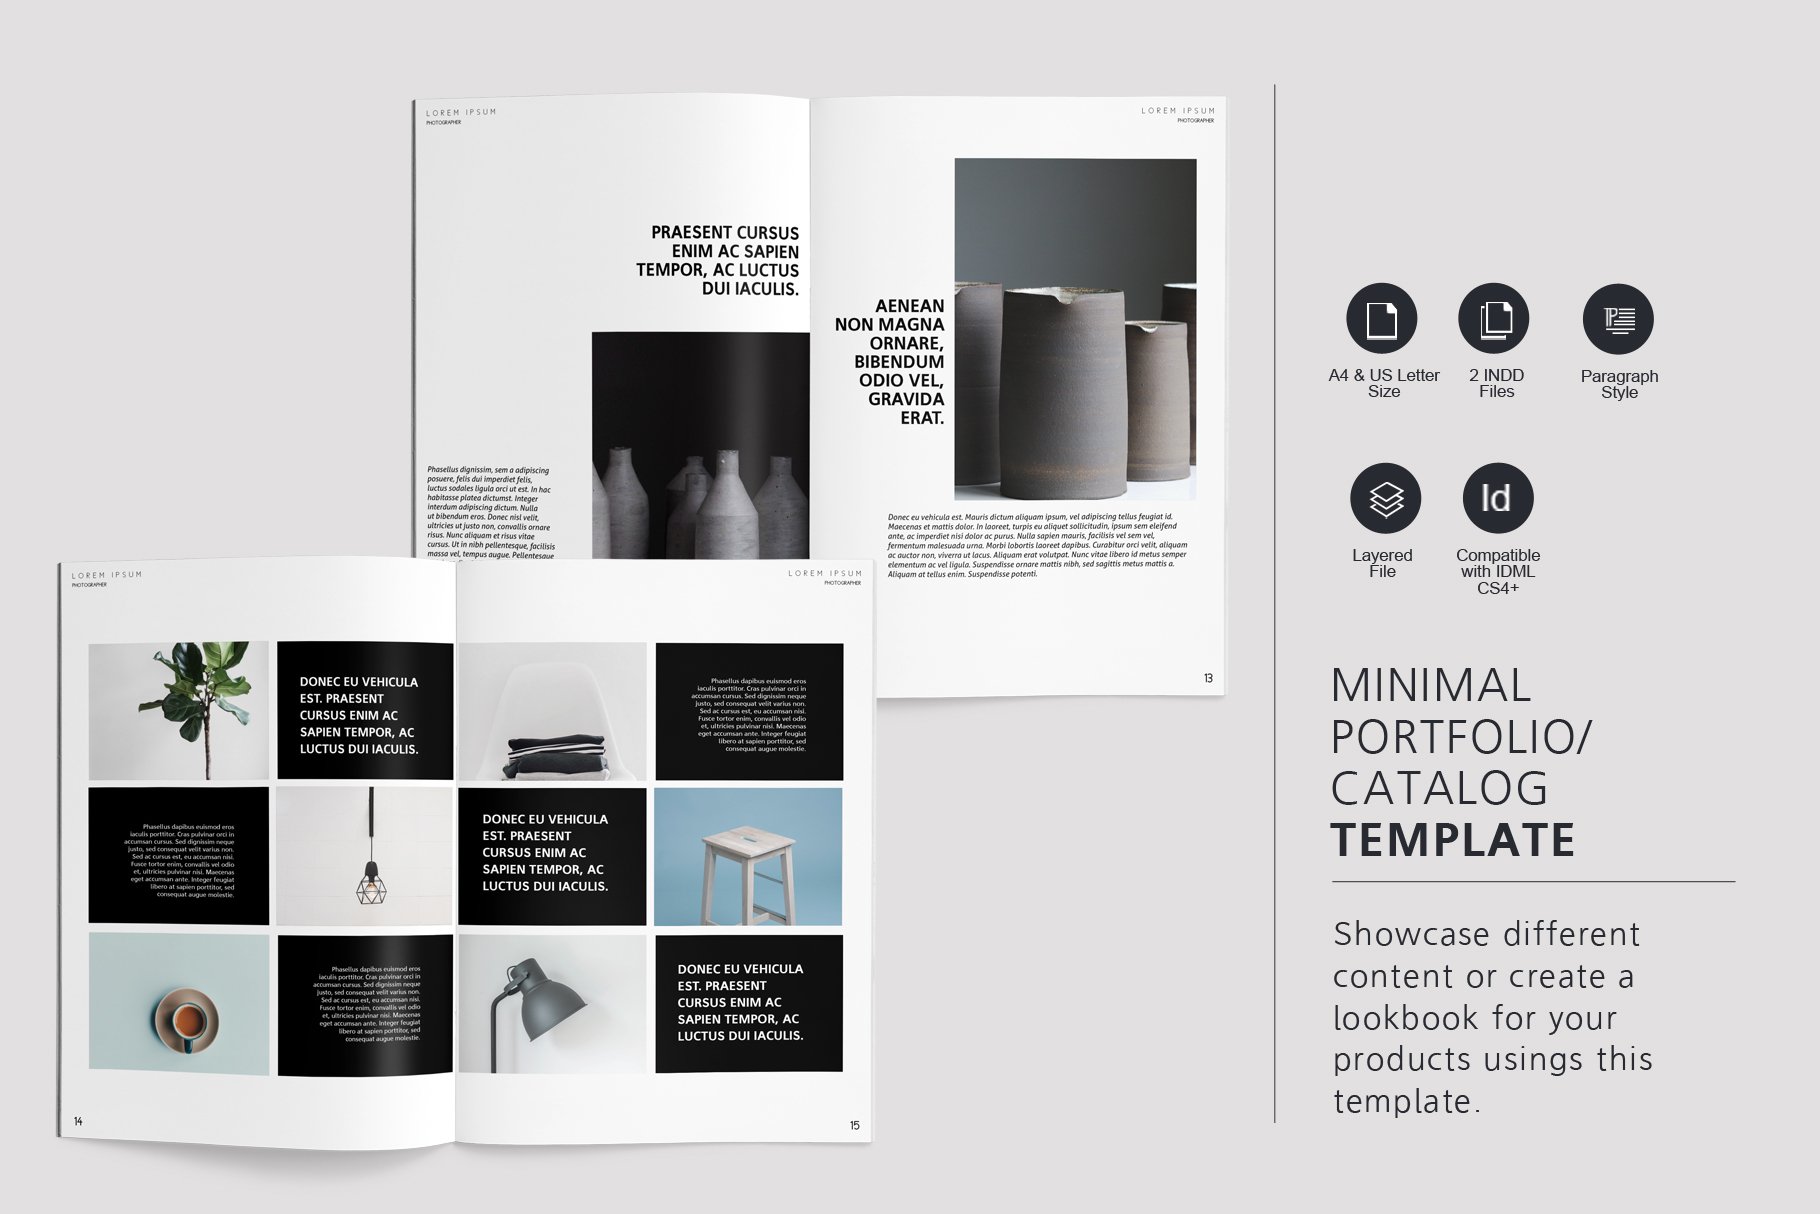 Minimal Portfolio | Catalog cover image.